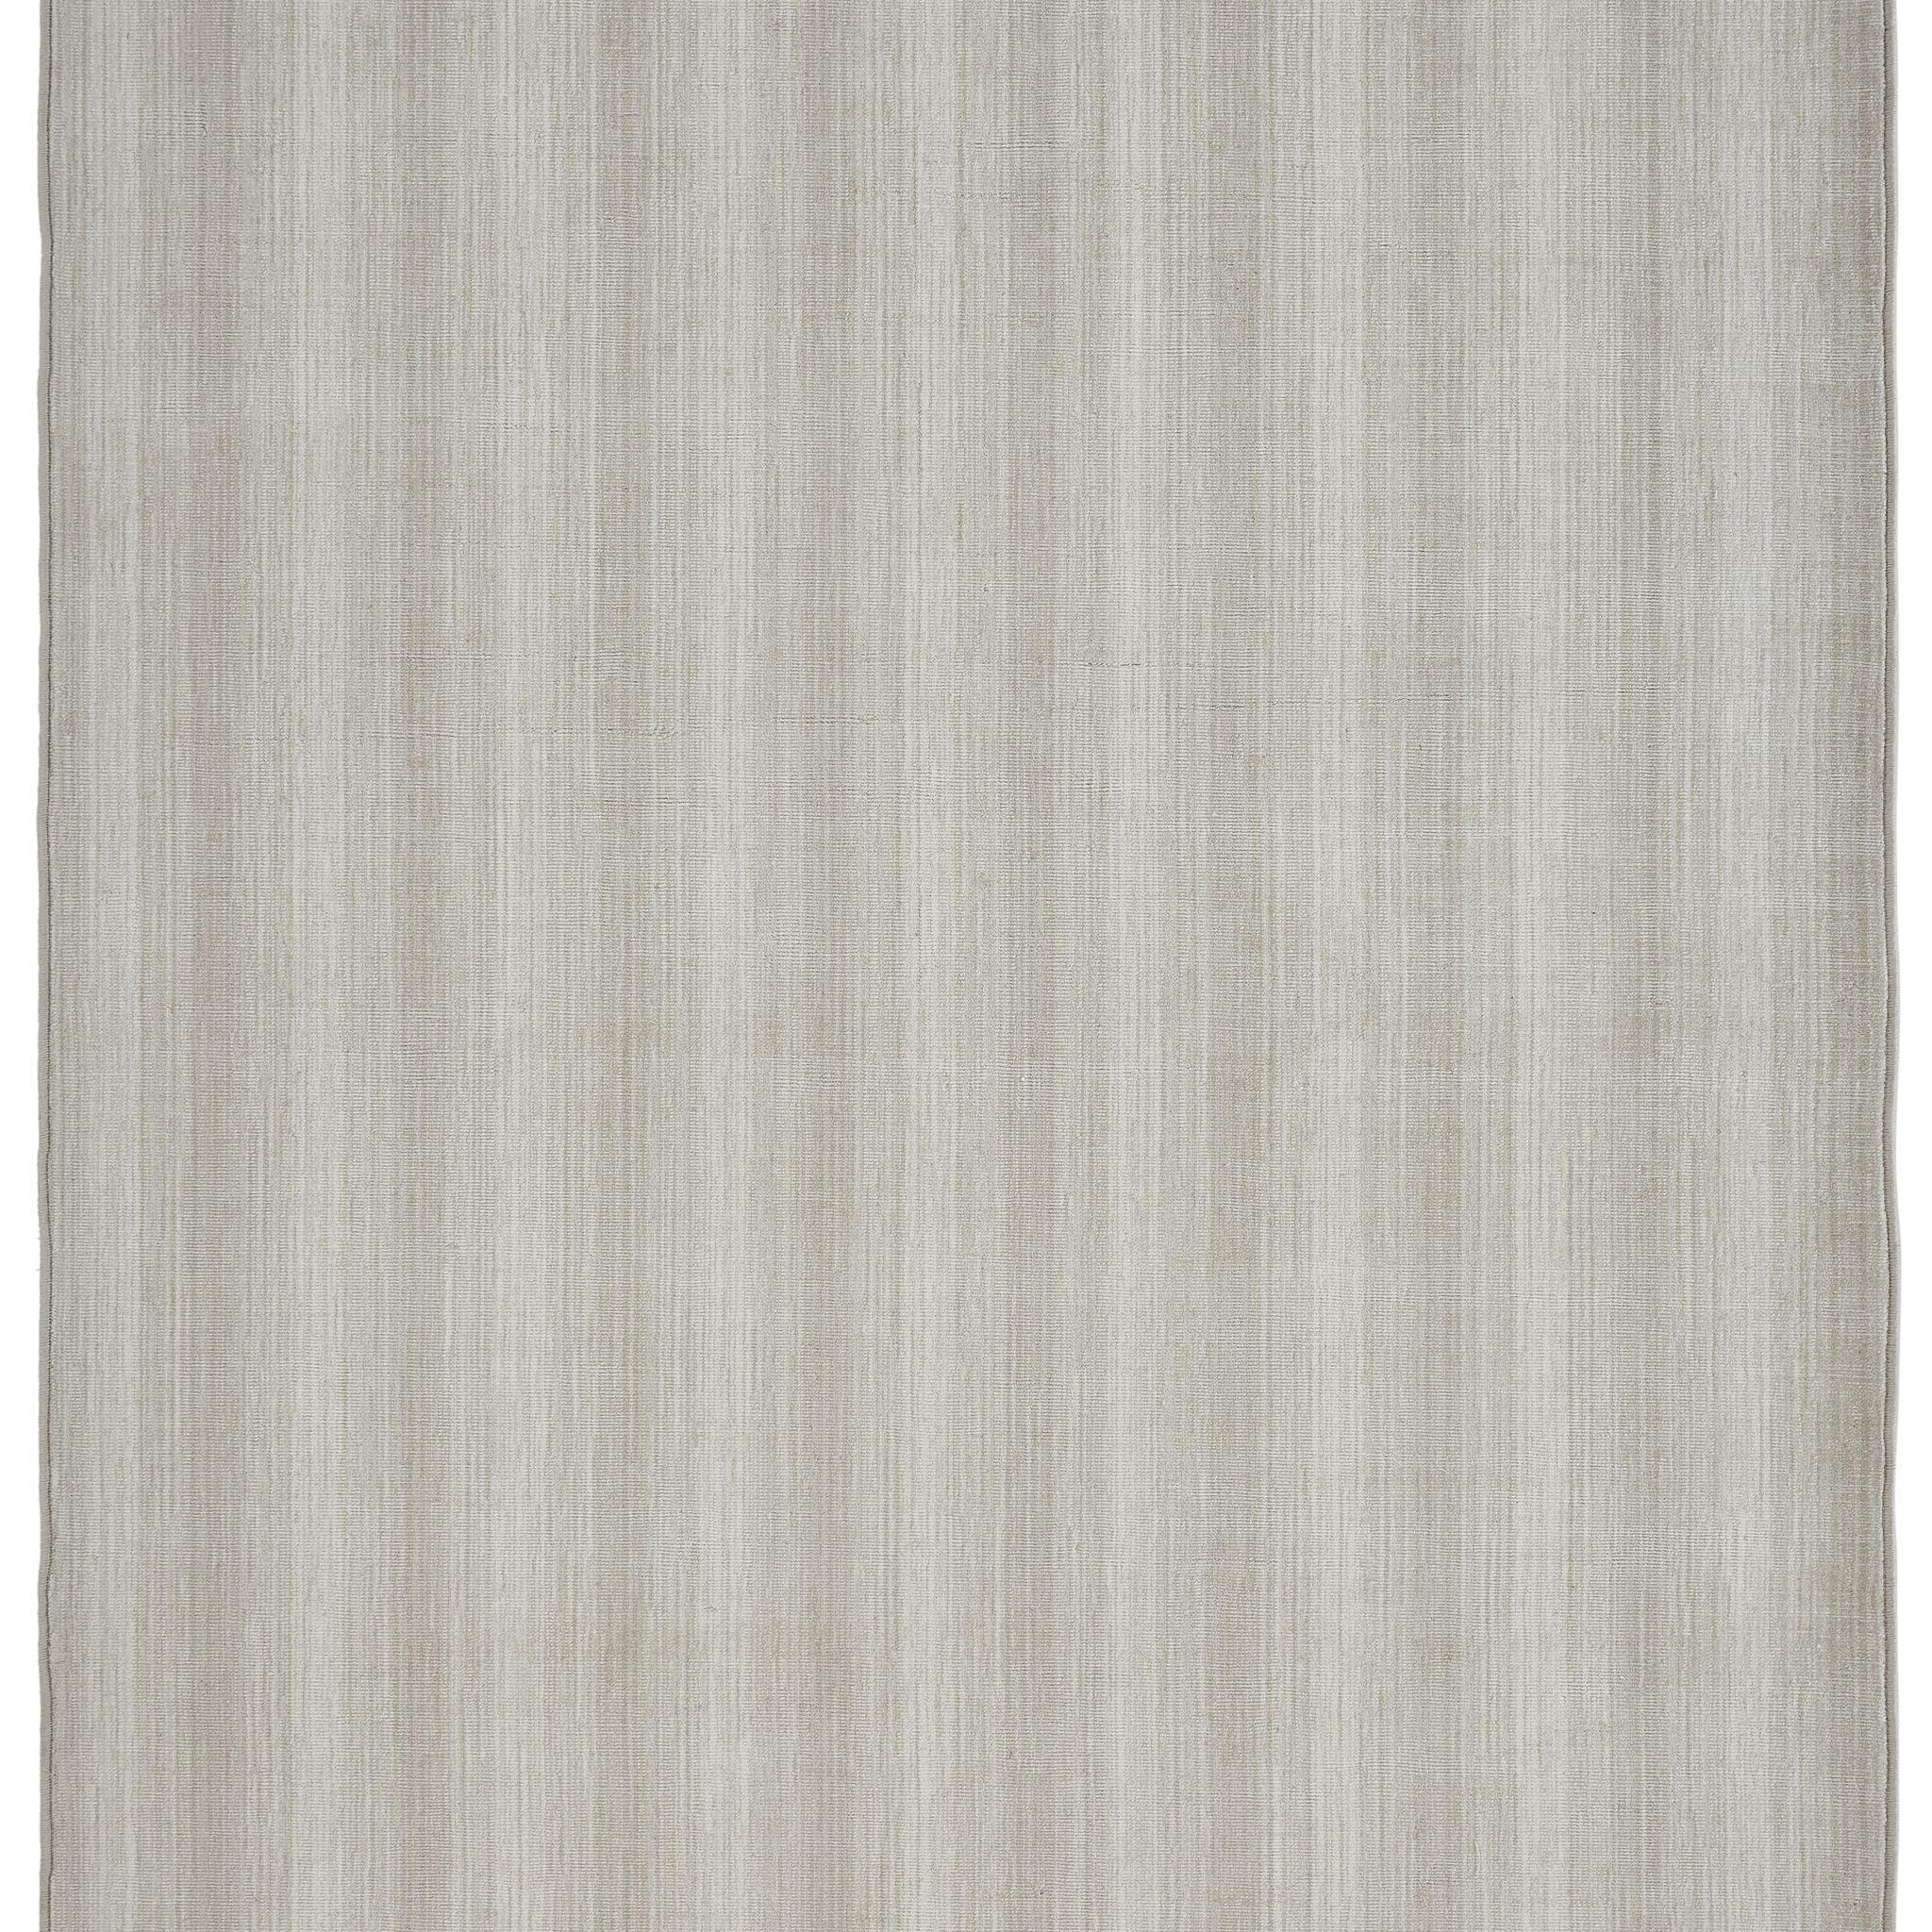 Vonte Hand-Loomed Carpet, Bisque Default Title